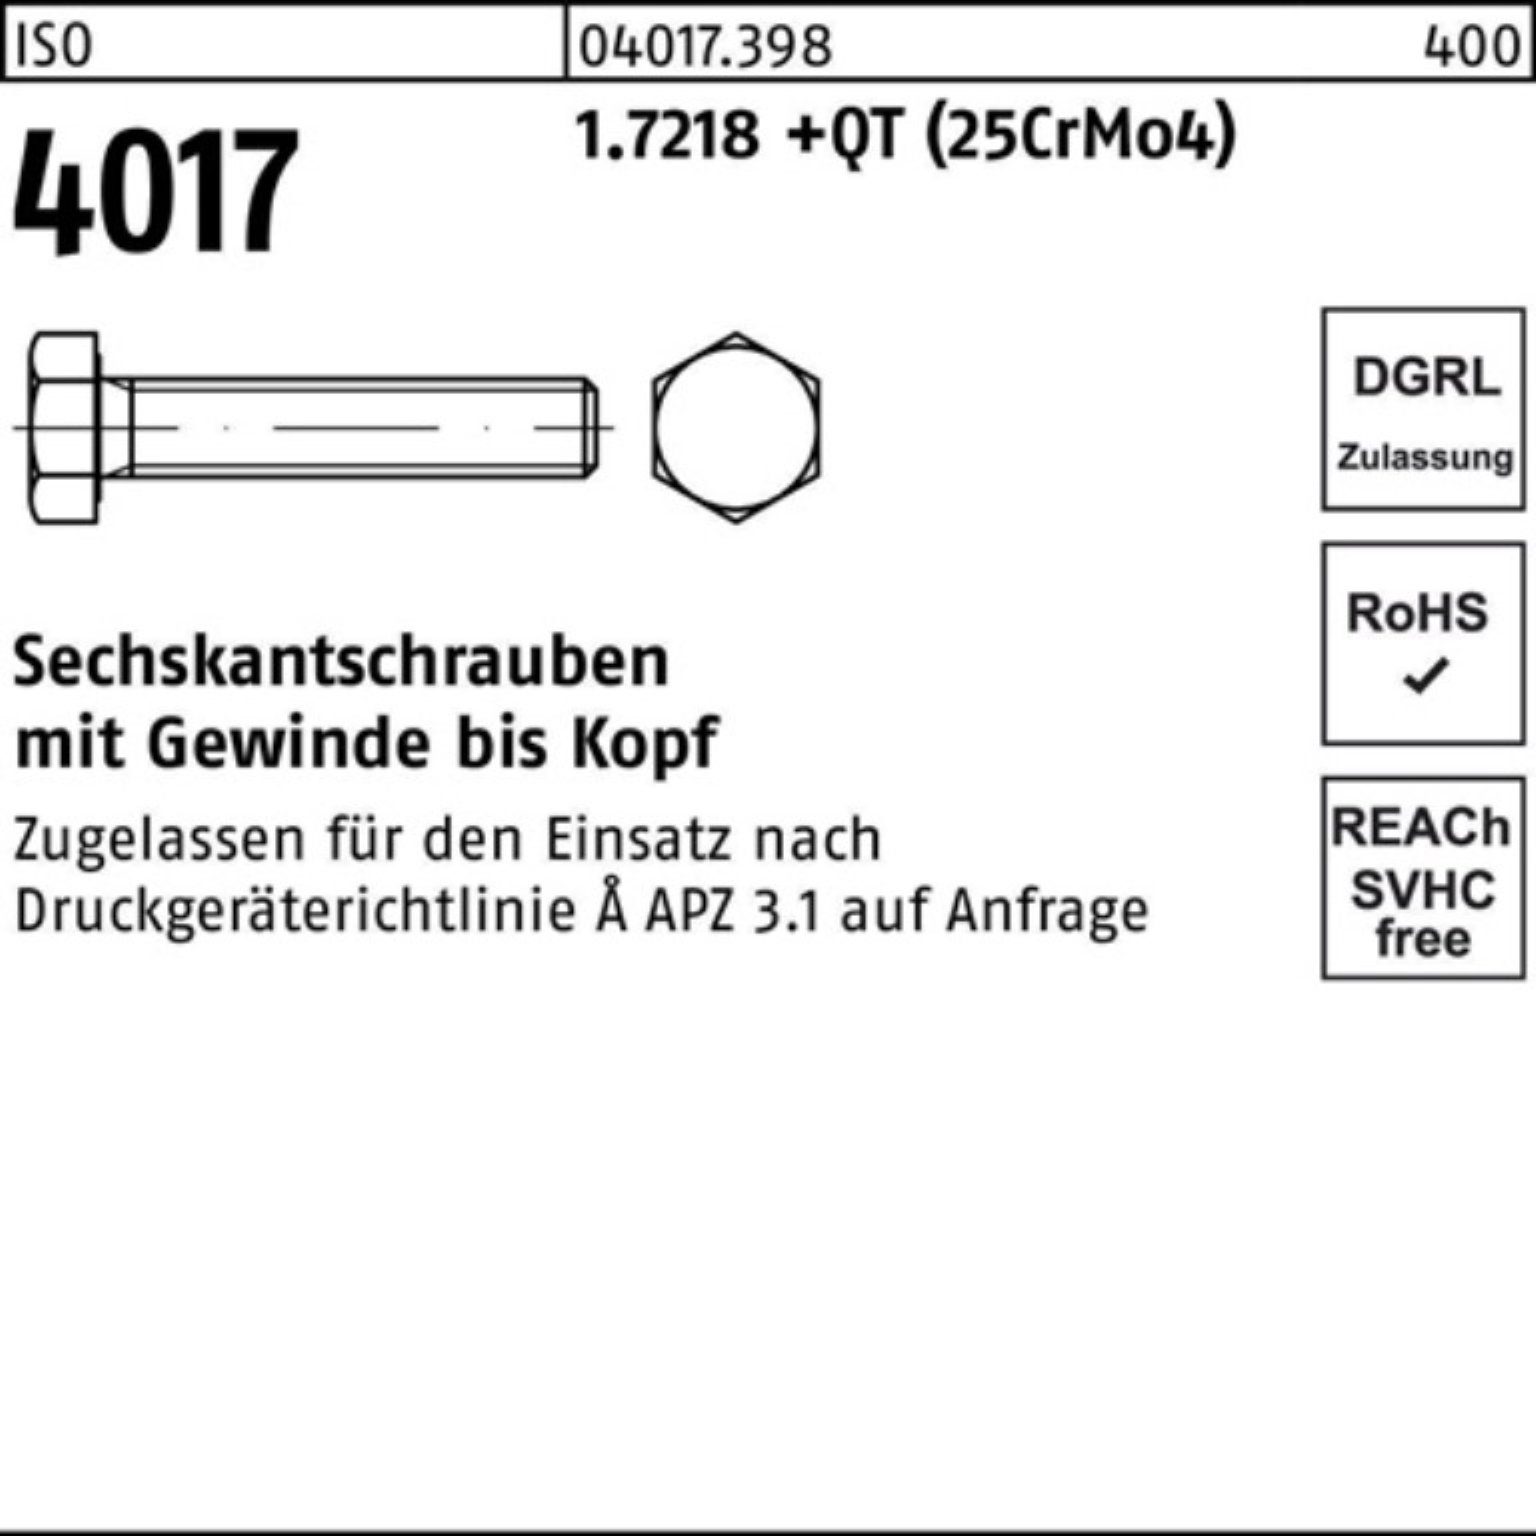 100er +QT ISO Bufab Sechskantschraube 4017 1.7218 Sechskantschraube (25CrMo4) Pack M27x 100 VG